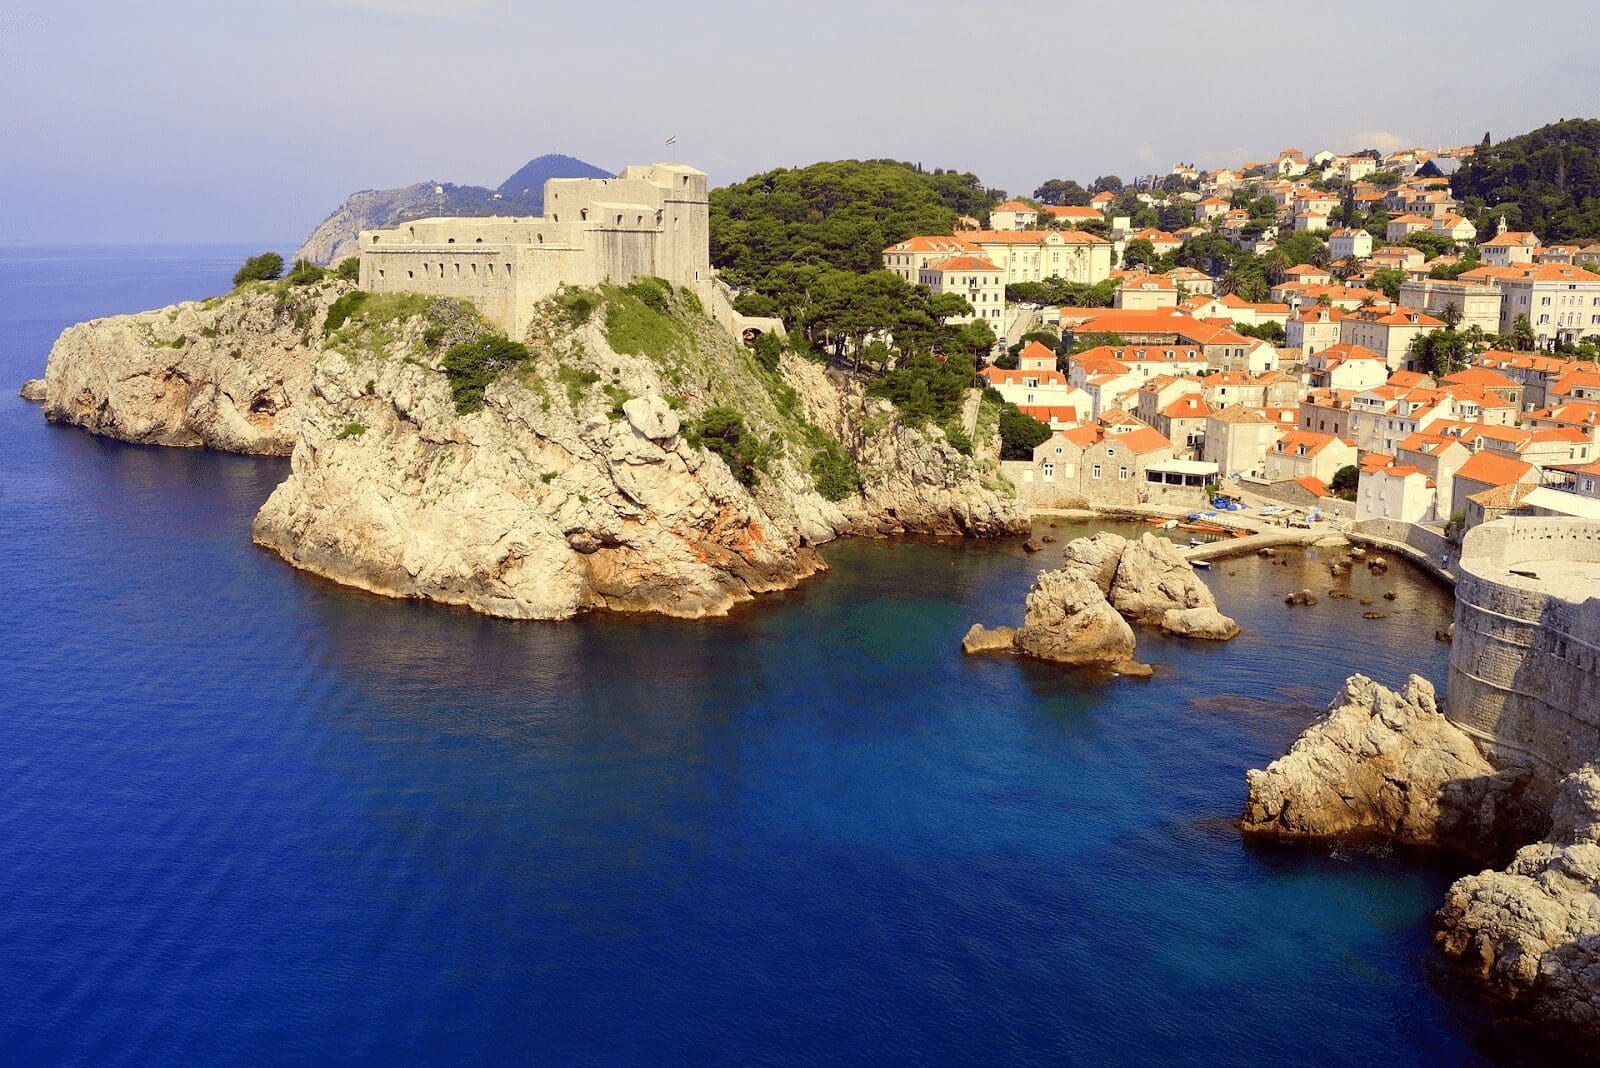 Overview of Dubrovnik